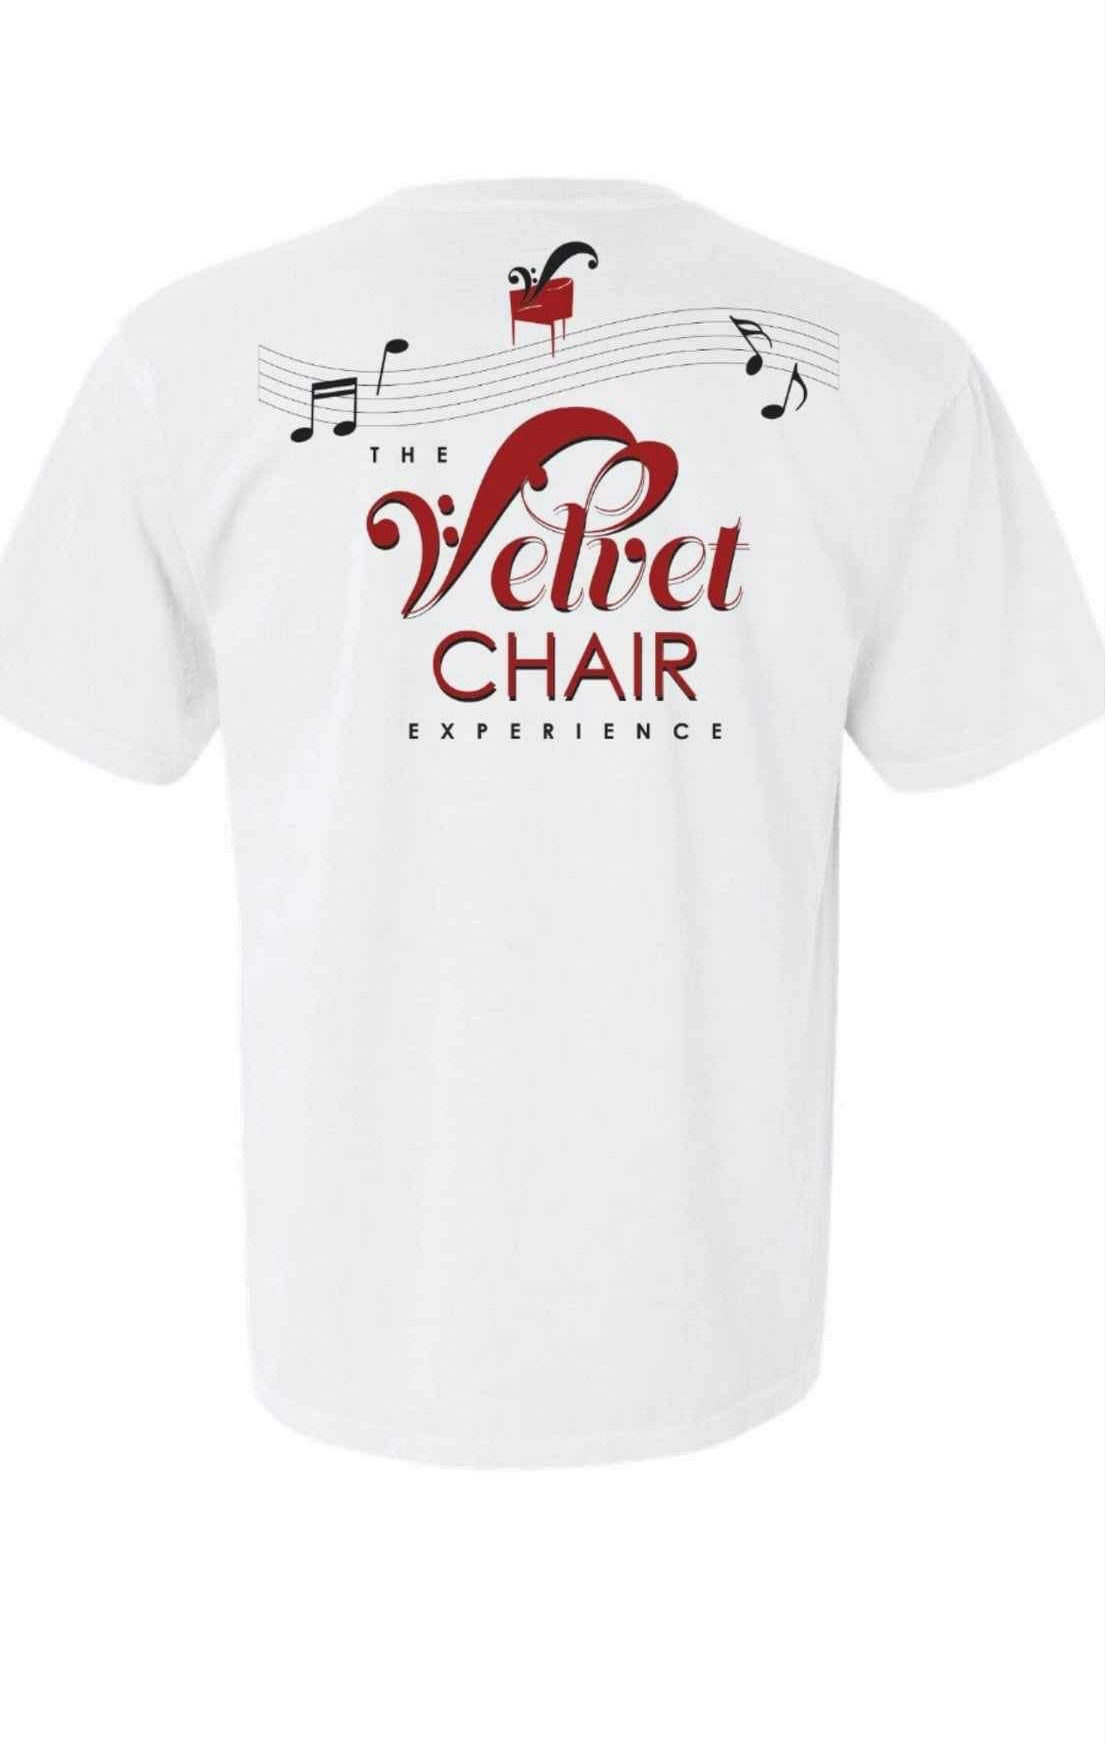 The Velvet Chair Experience Merch